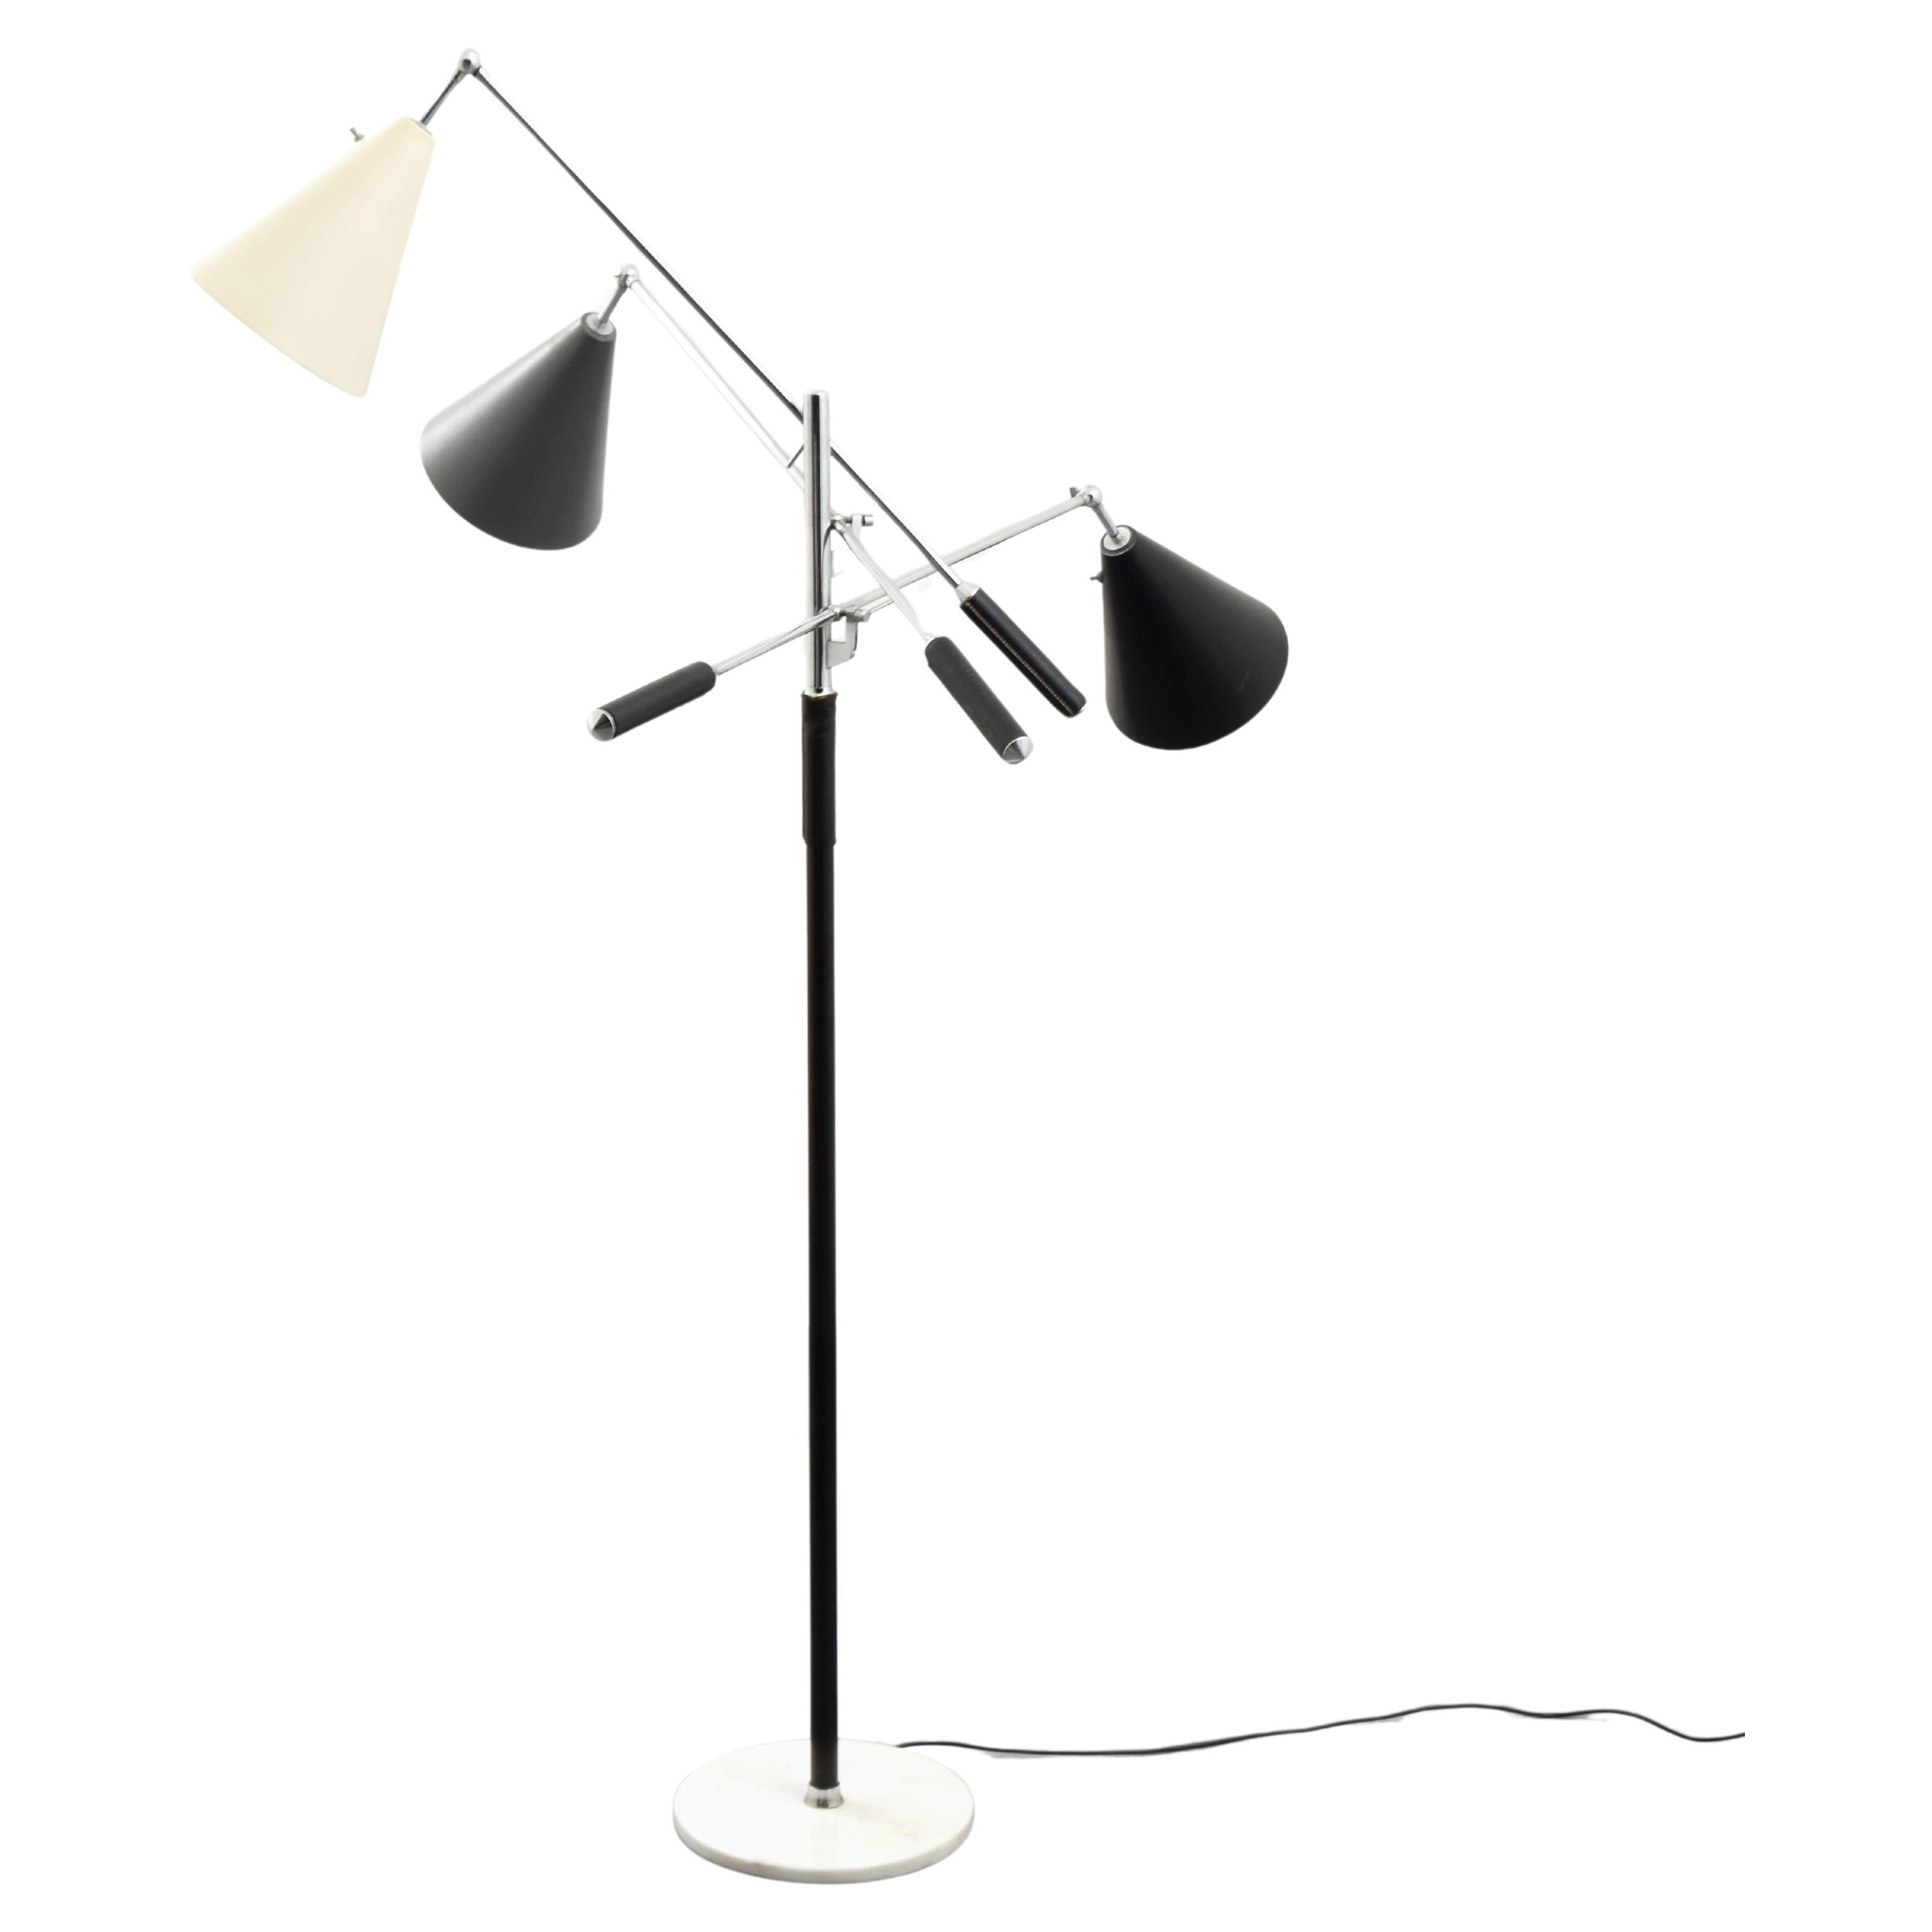 Arredoluce “Triennale” Floor Lamp